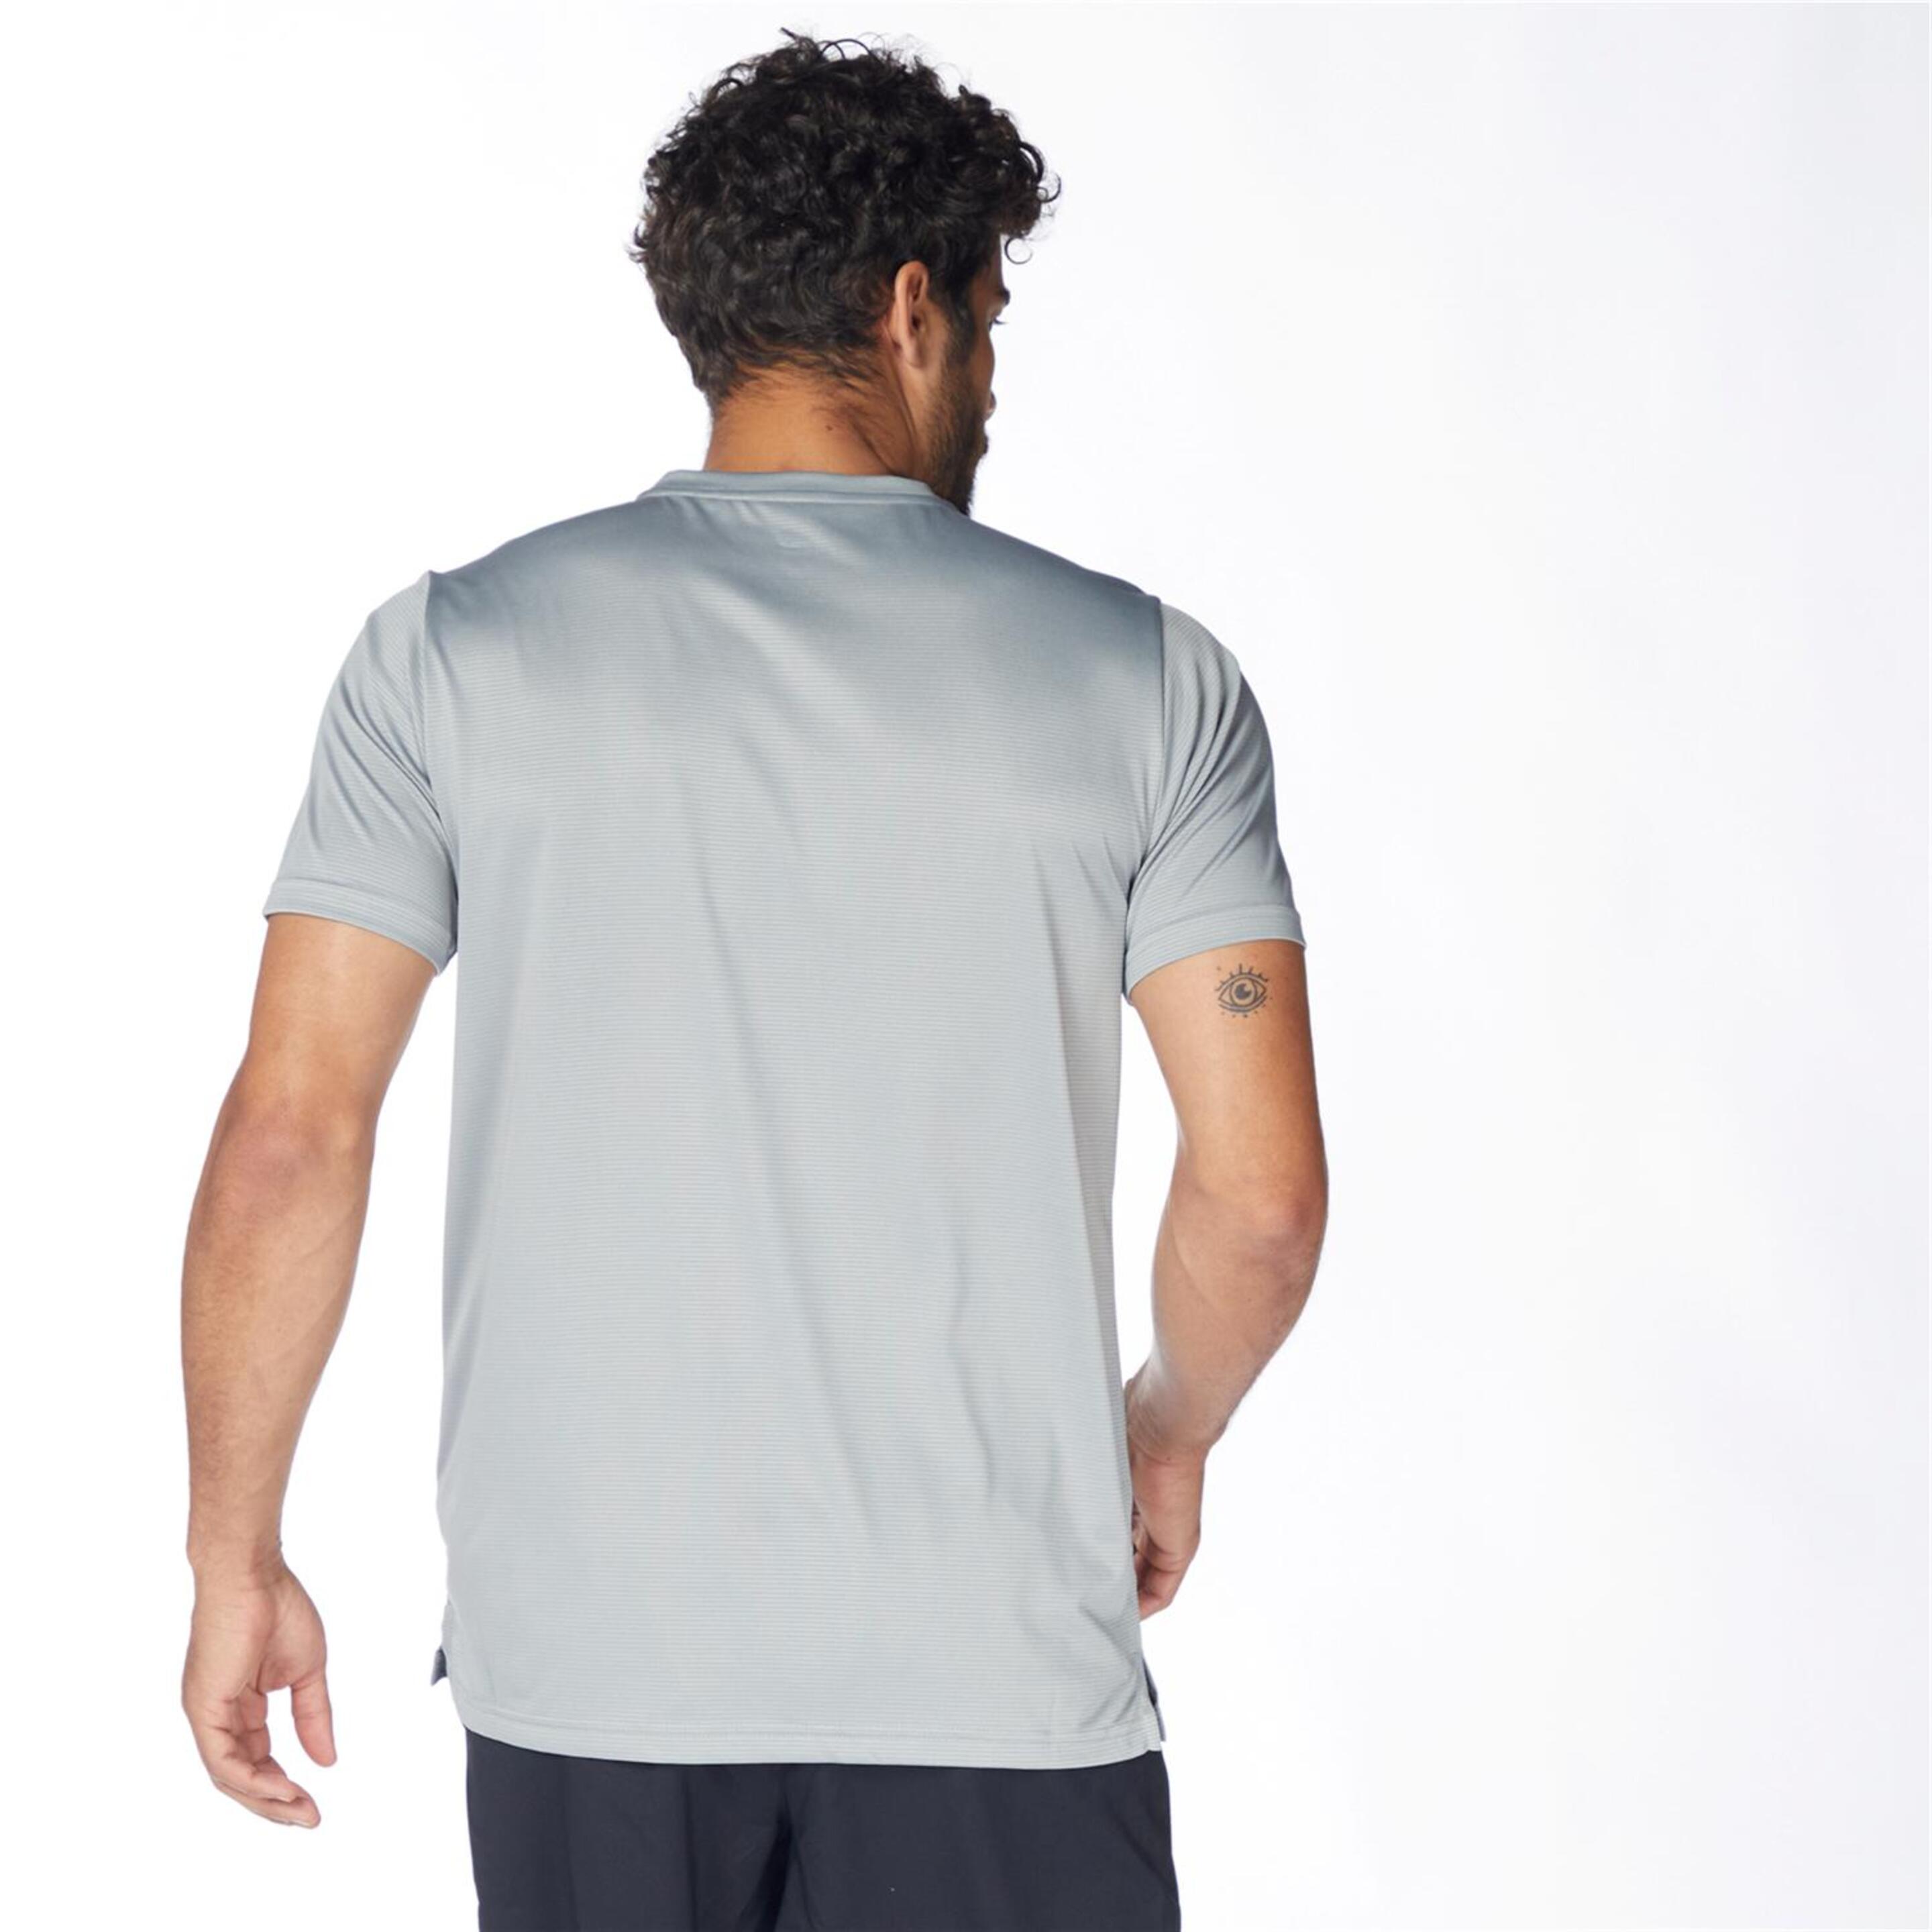 New Balance Performance - Gris - Camiseta Running Hombre